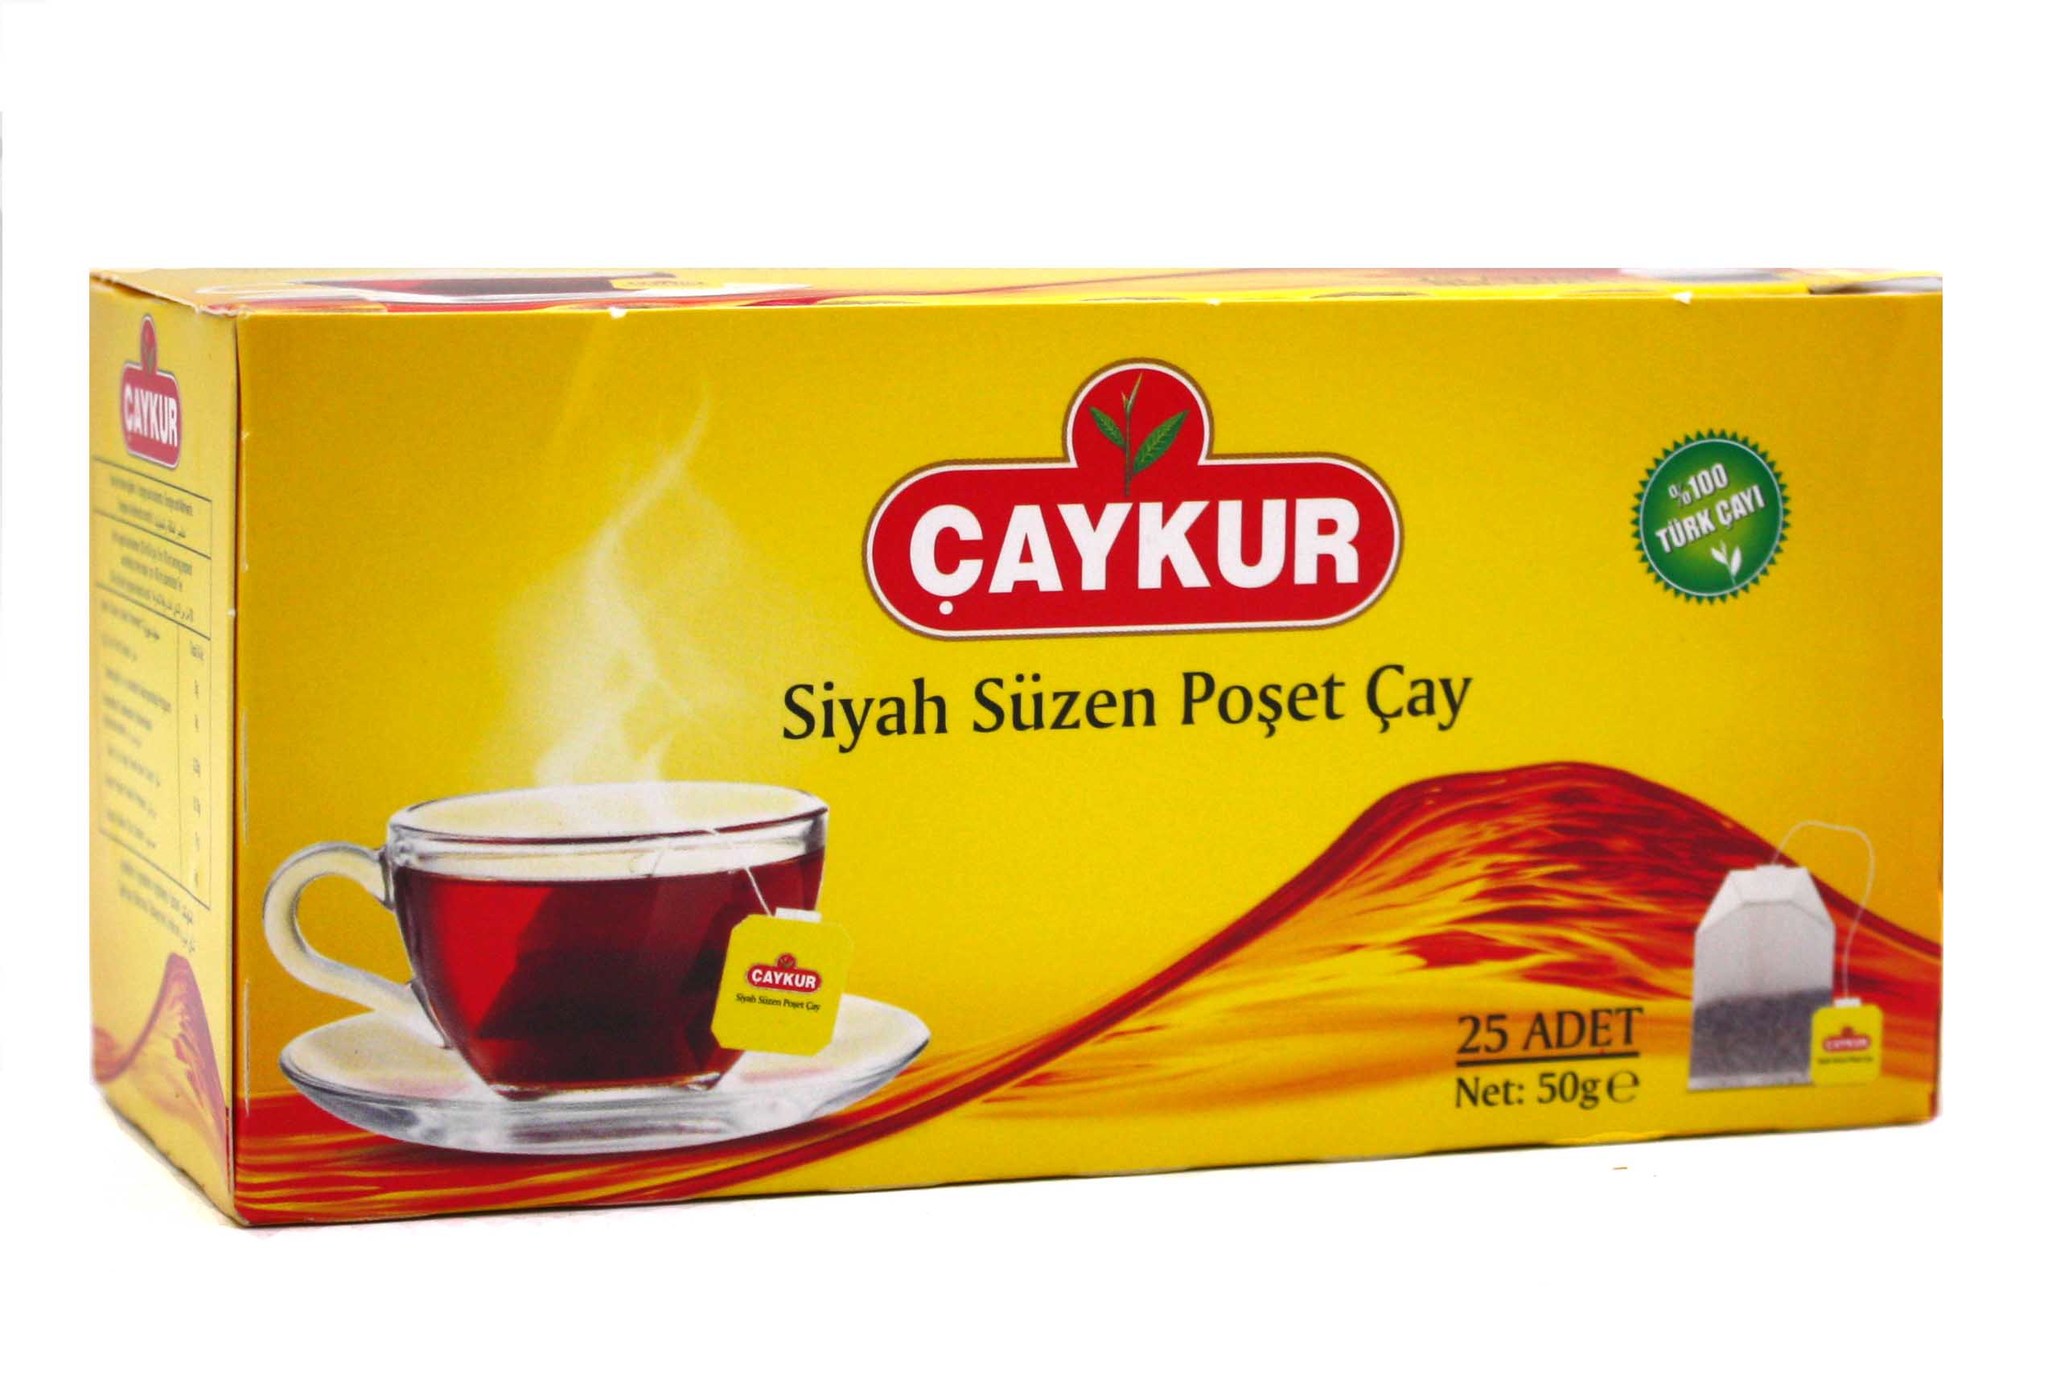 Çaykur Пакетированный турецкий черный чай, Çaykur, 25 пакетов import_files_14_147a4b0cf73e11eaa9d3484d7ecee297_a99c2340f96d11eaa9d4484d7ecee297.jpg